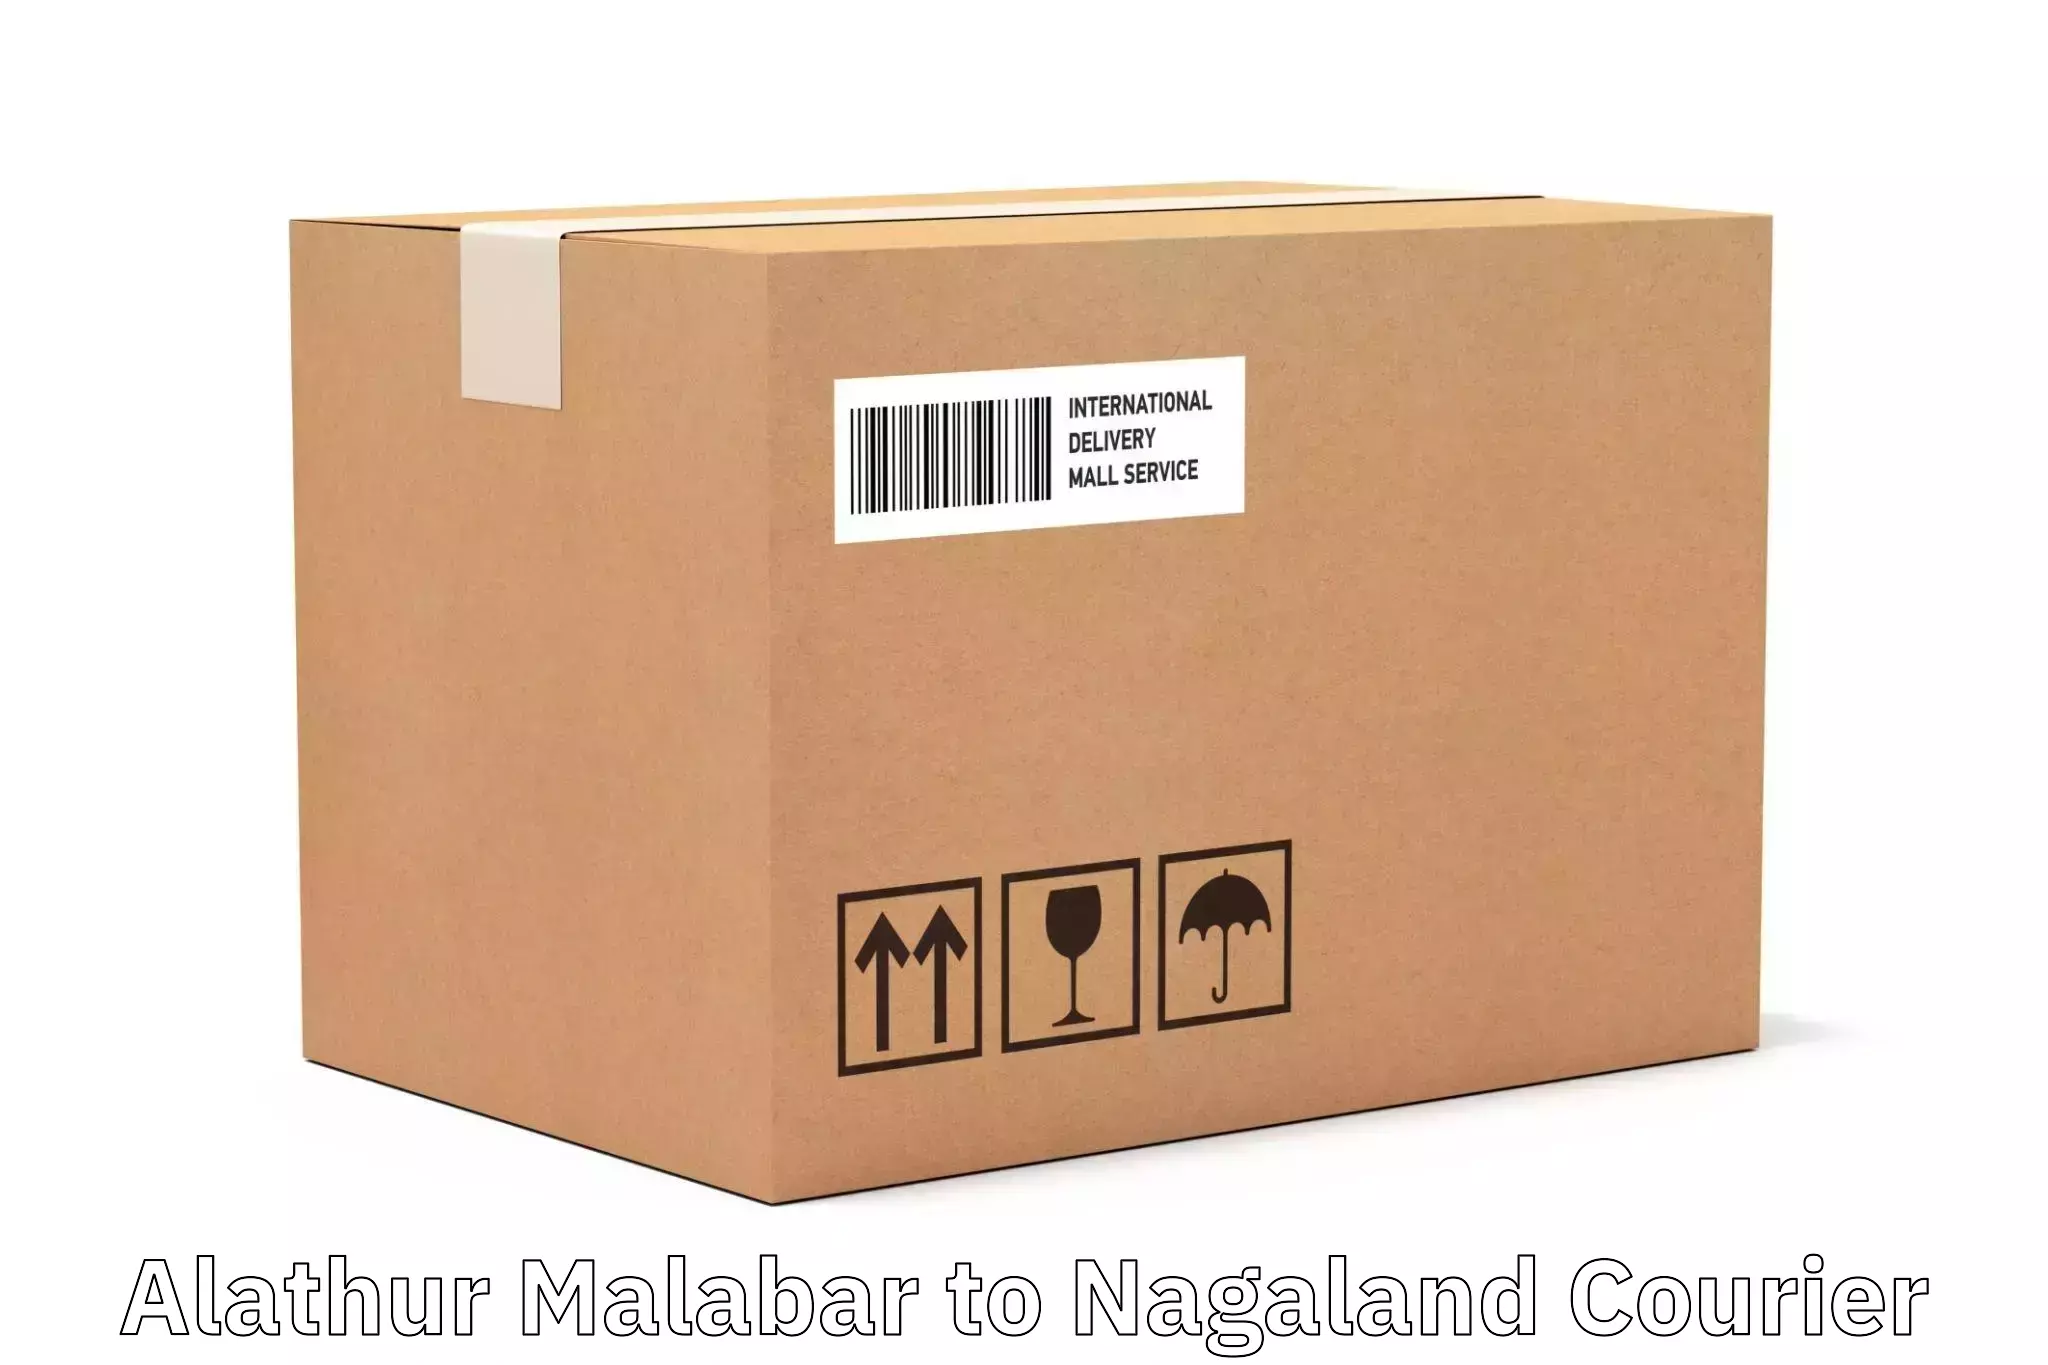 Courier service partnerships Alathur Malabar to Nagaland